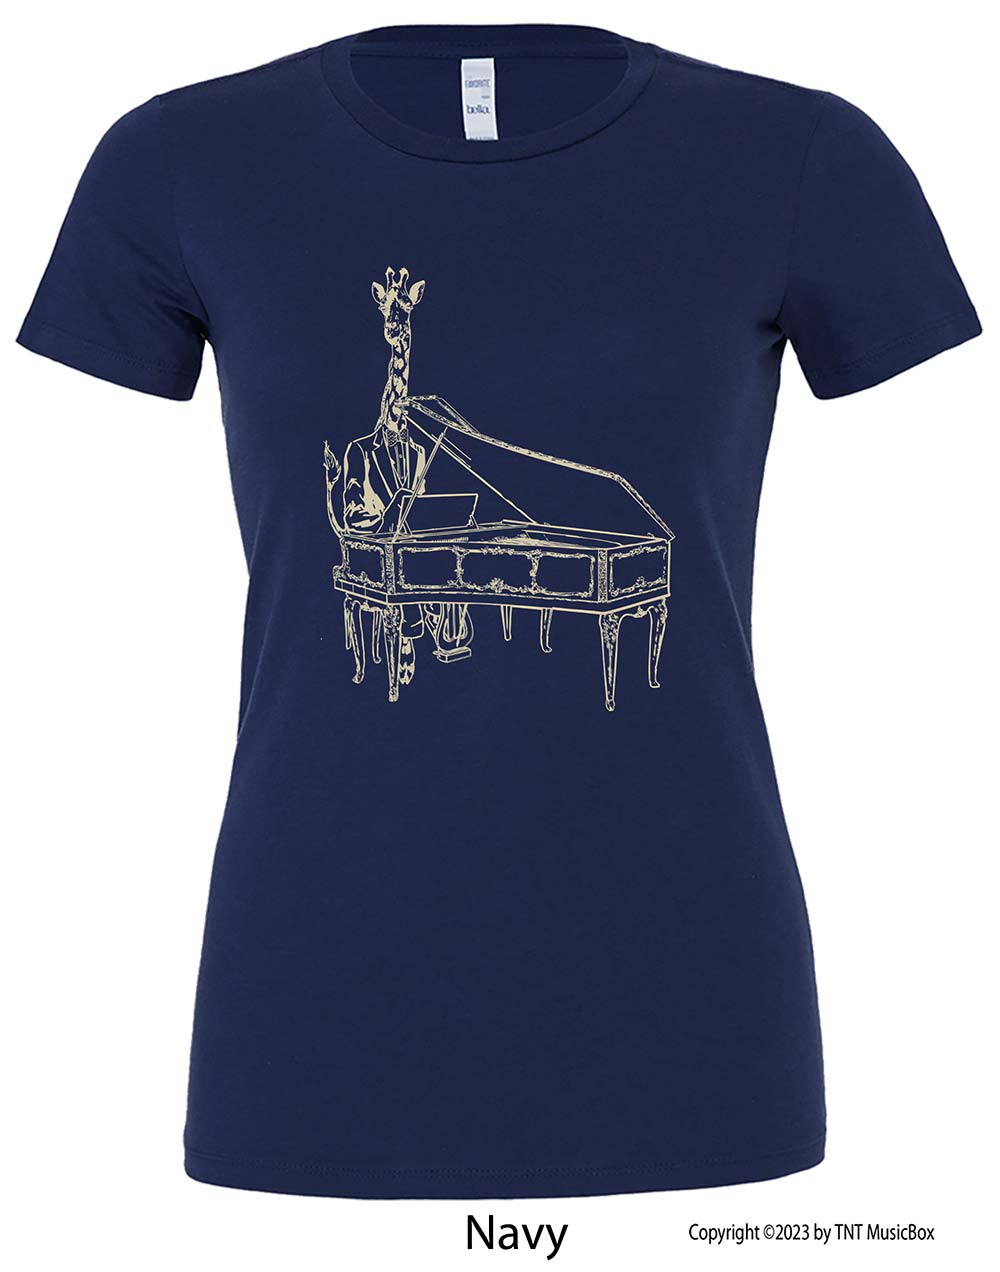 Giraffe Playing Piano on a Navy Shirt